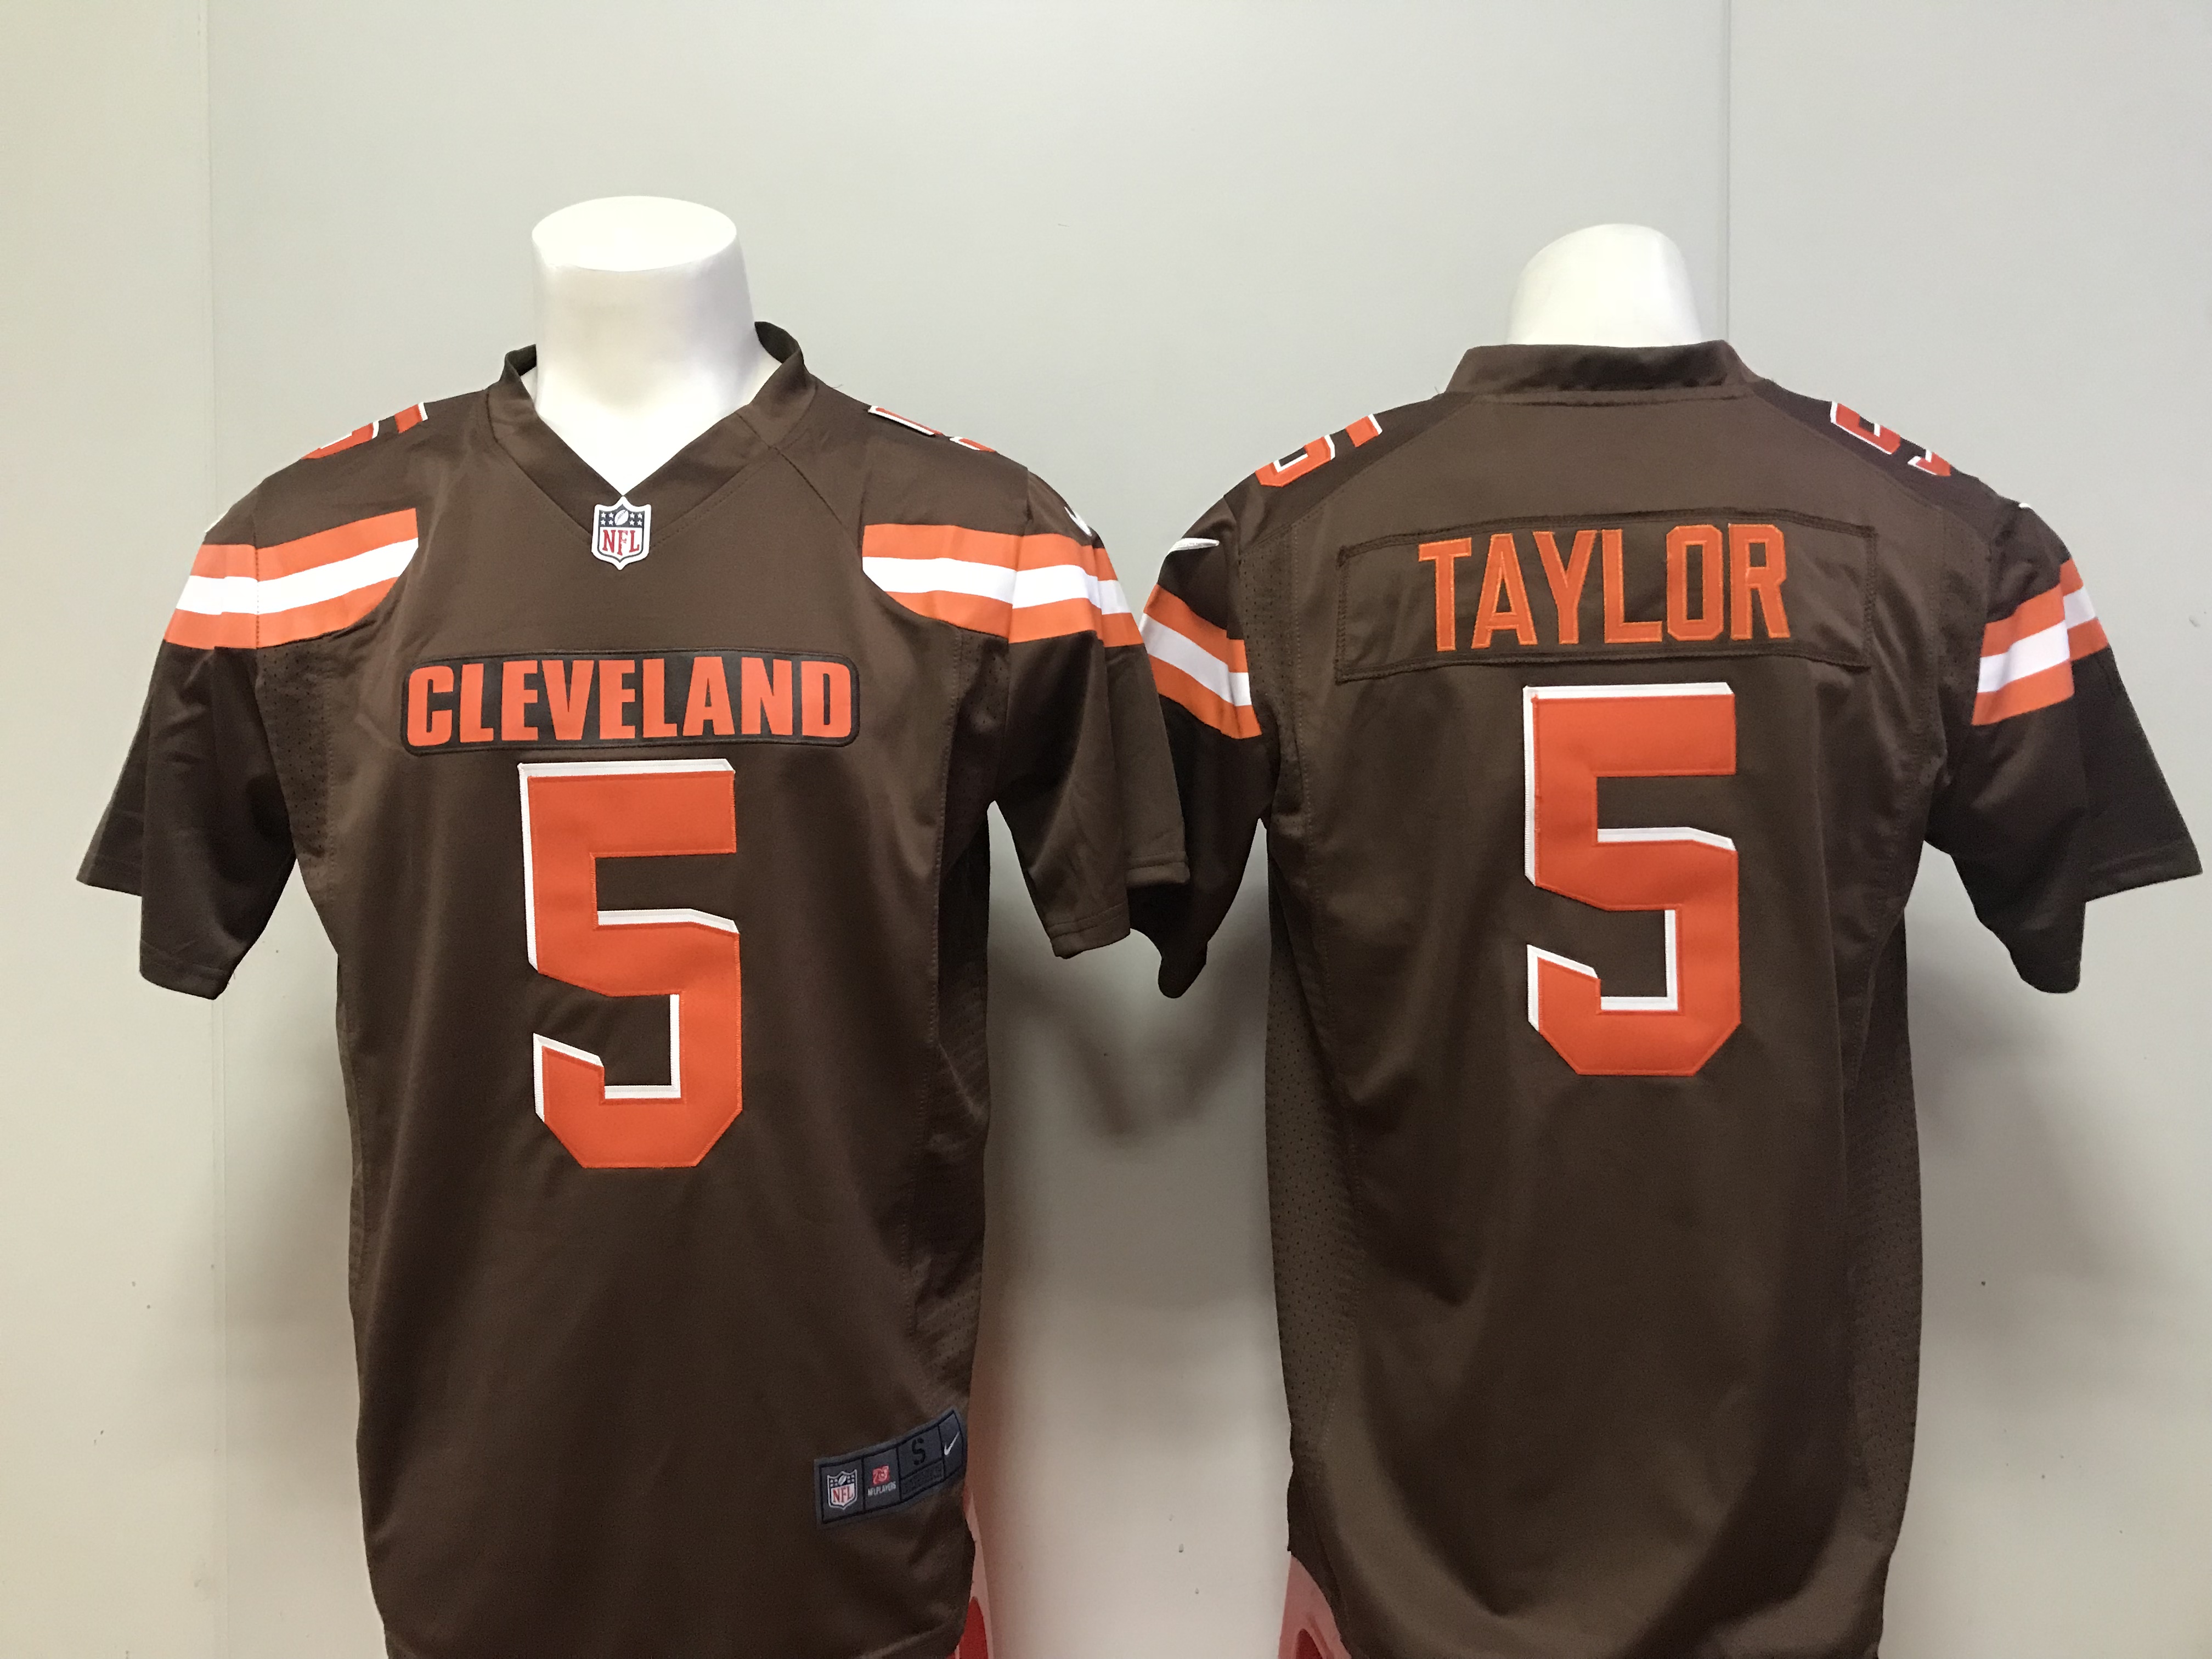 NFL Cleveland Browns #5 Taylor Brown Vapor Limited Jersey